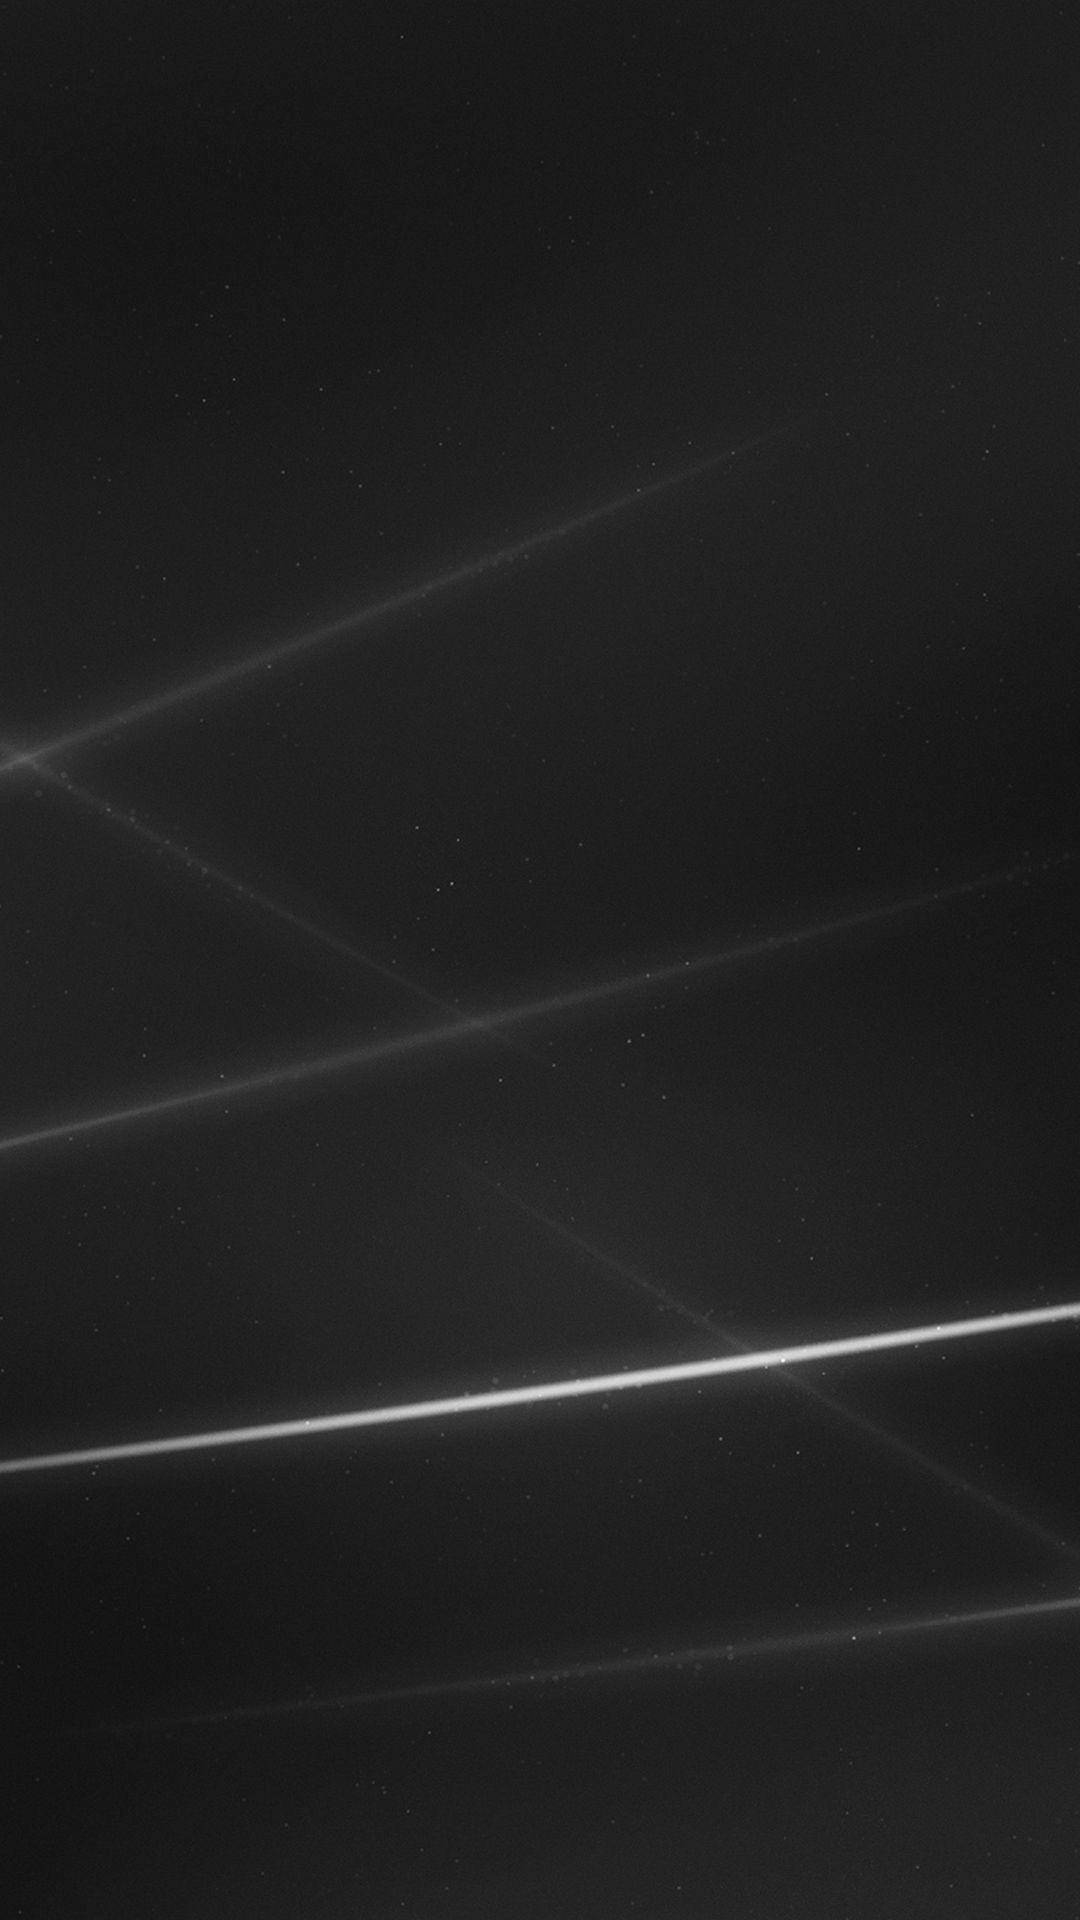 High-speed Light Streaks Dark Mode Background